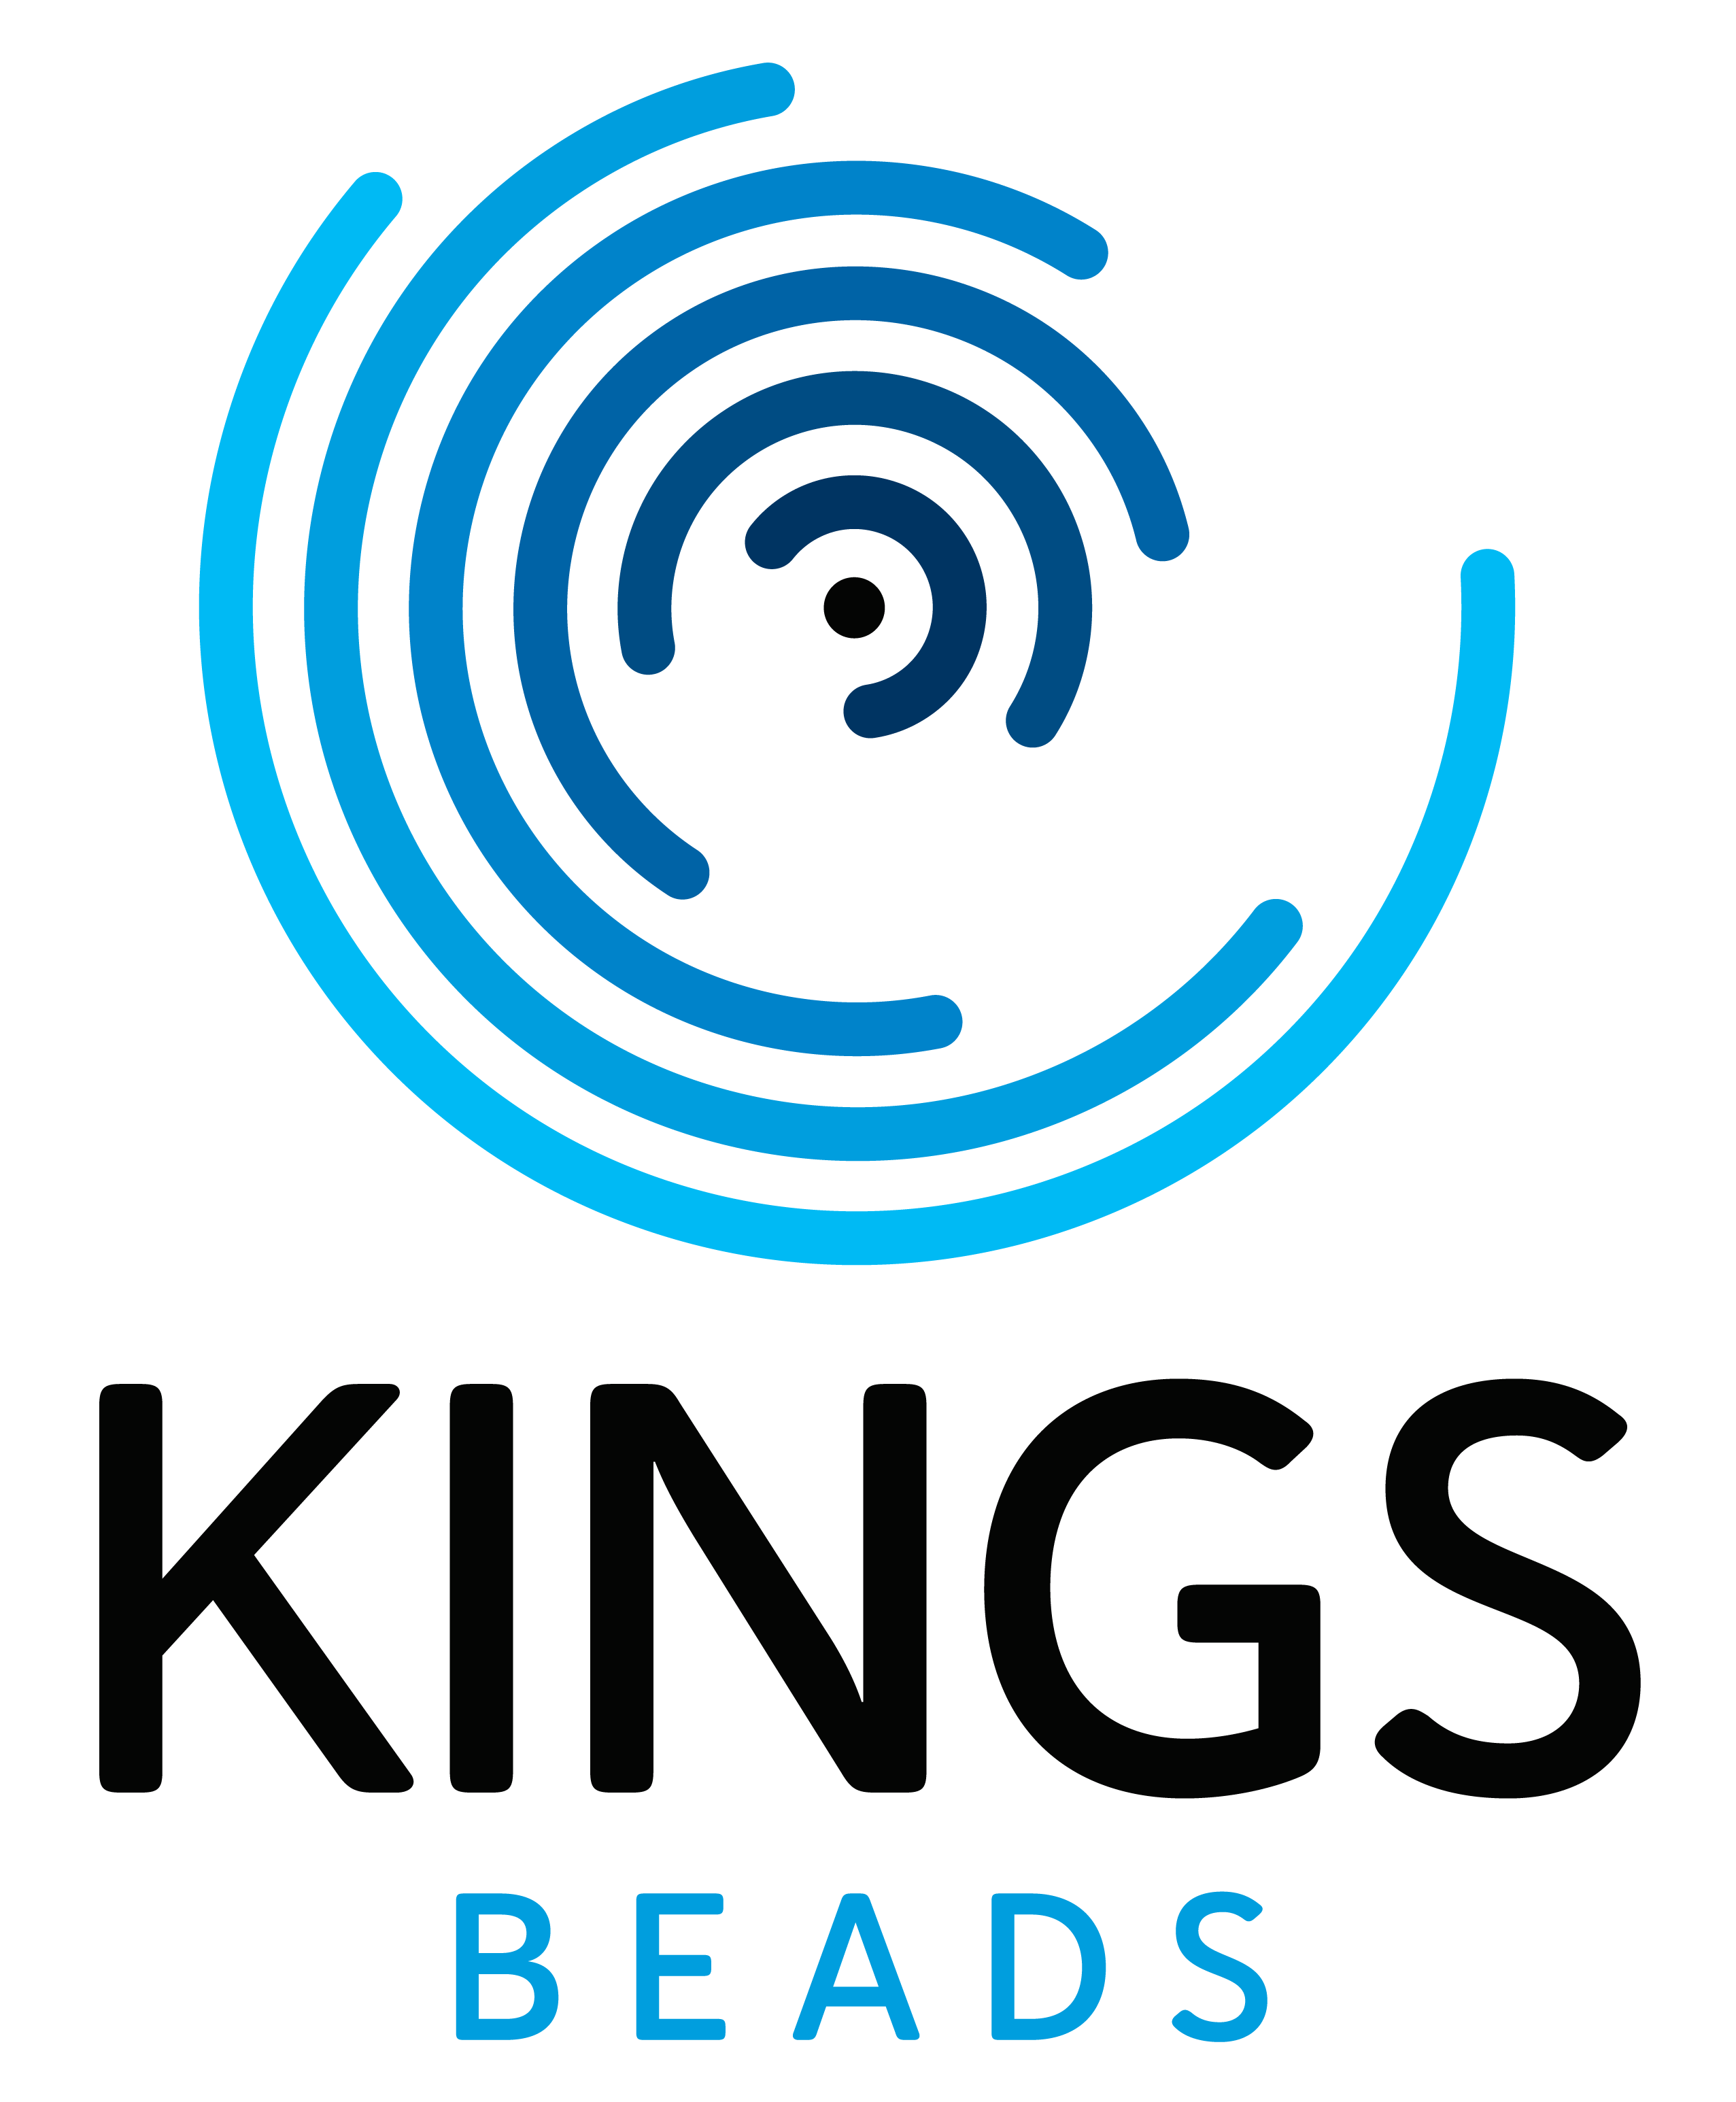 Kings beads